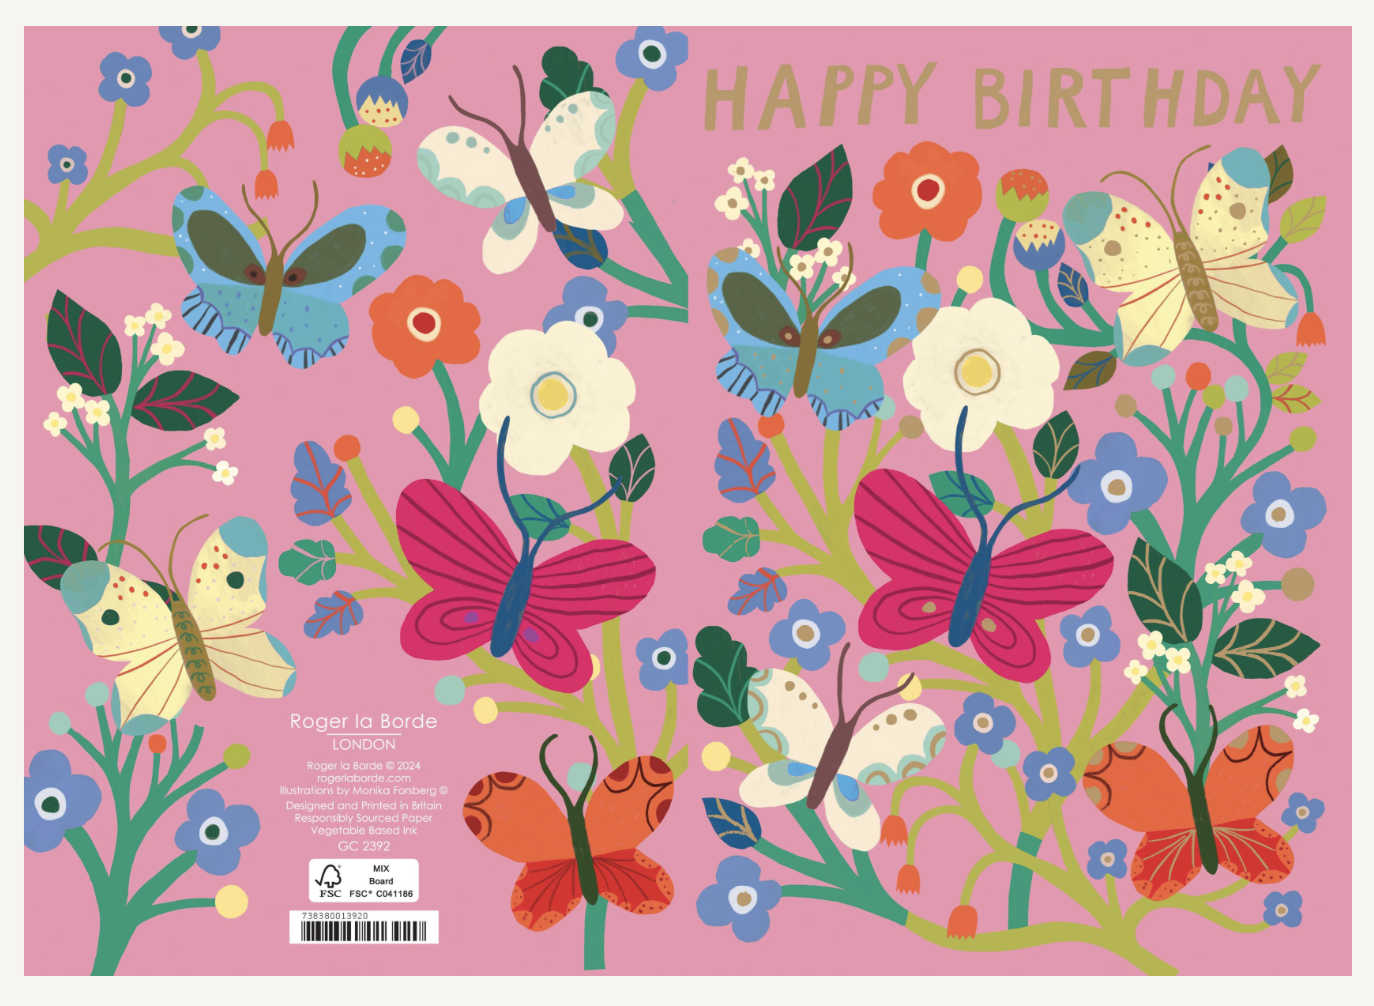 Happy Butterflies Greeting Card